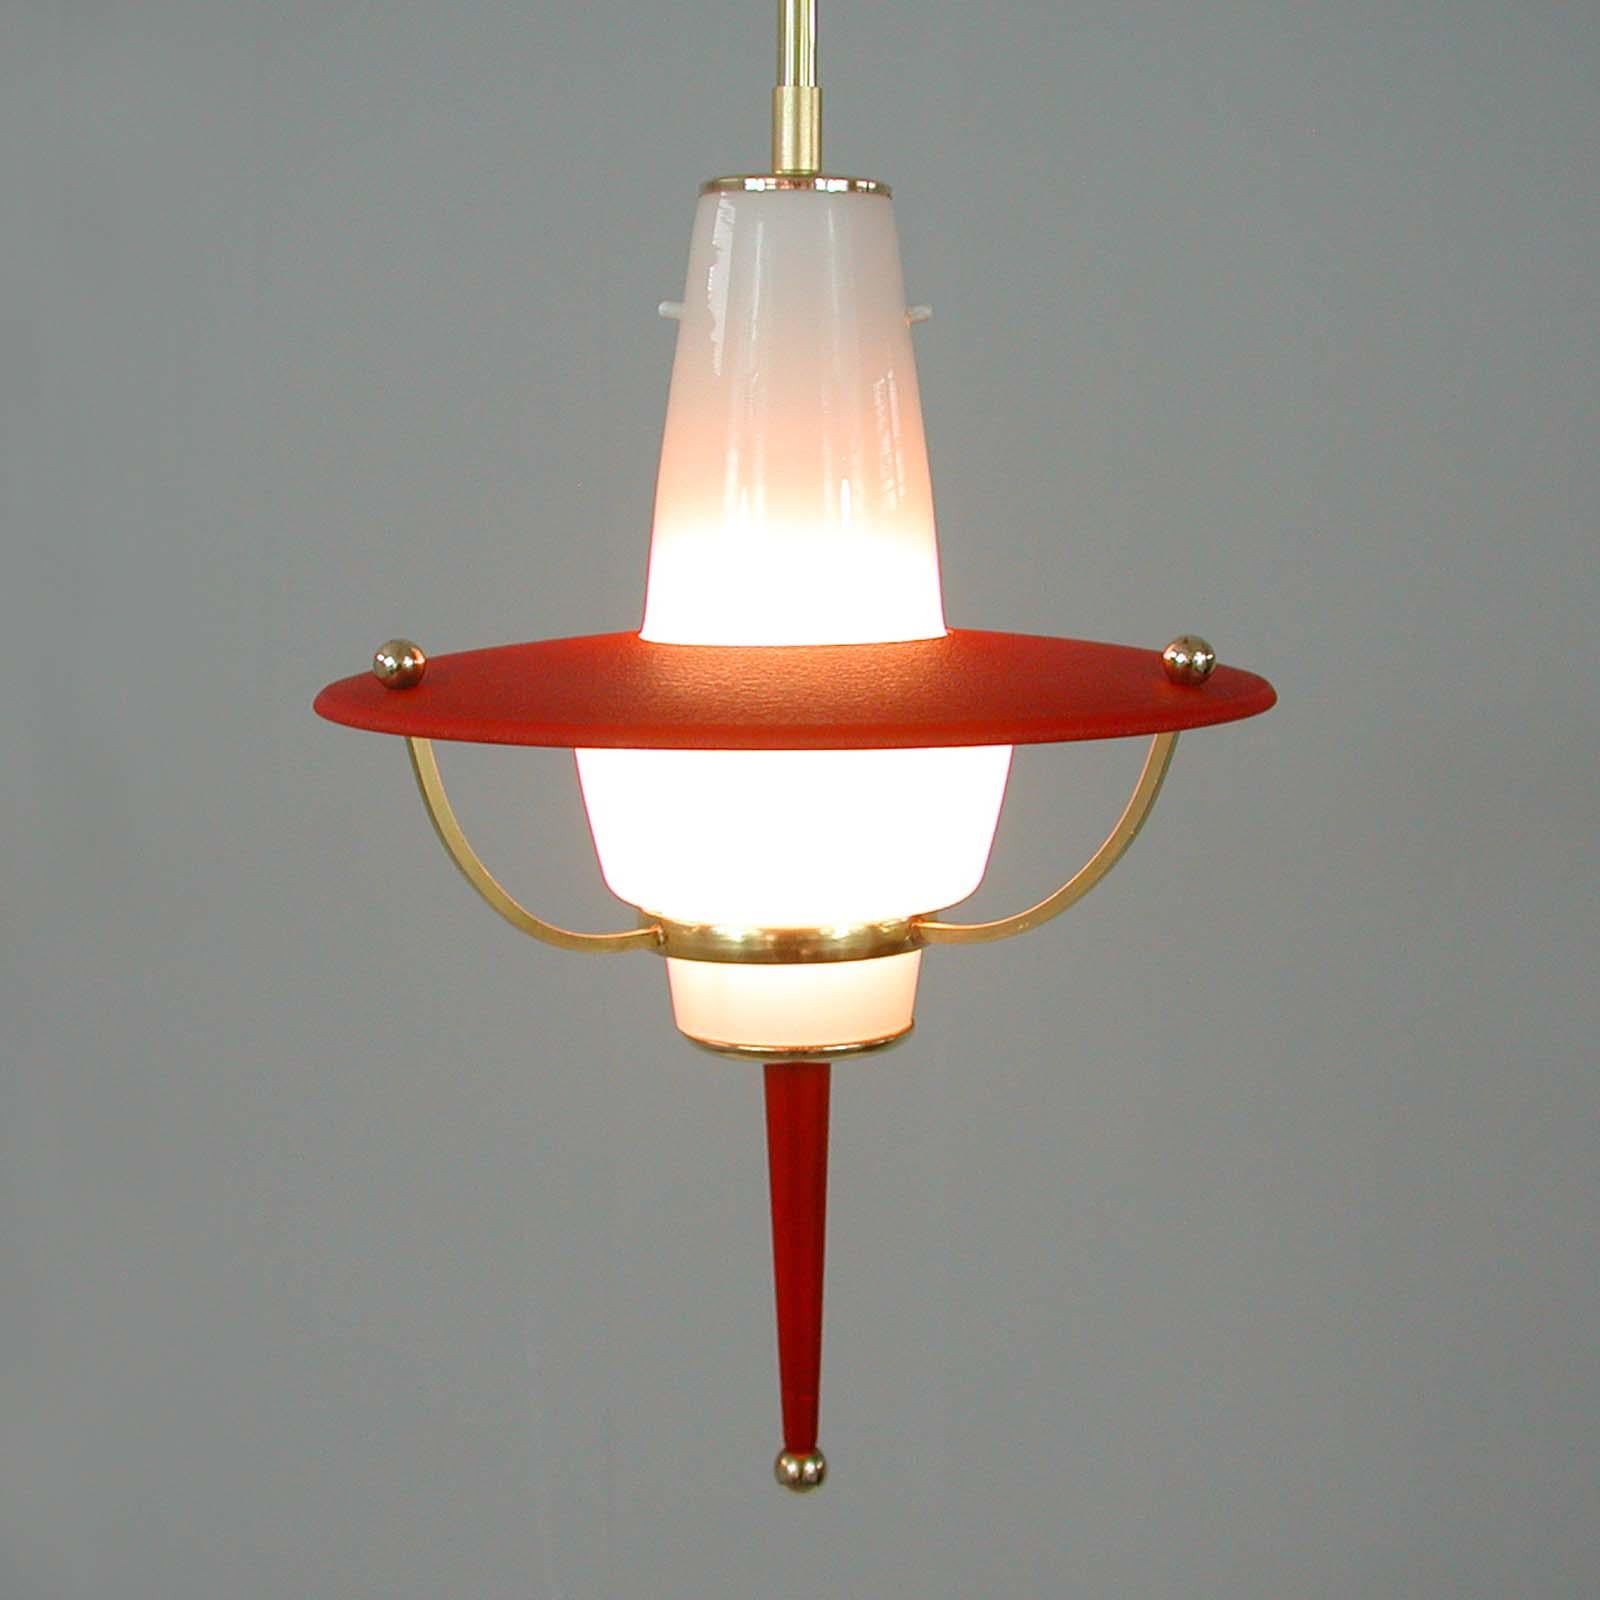 Modernist 1950s Italian Red Lantern, Milk Glass & Brass For Sale 1